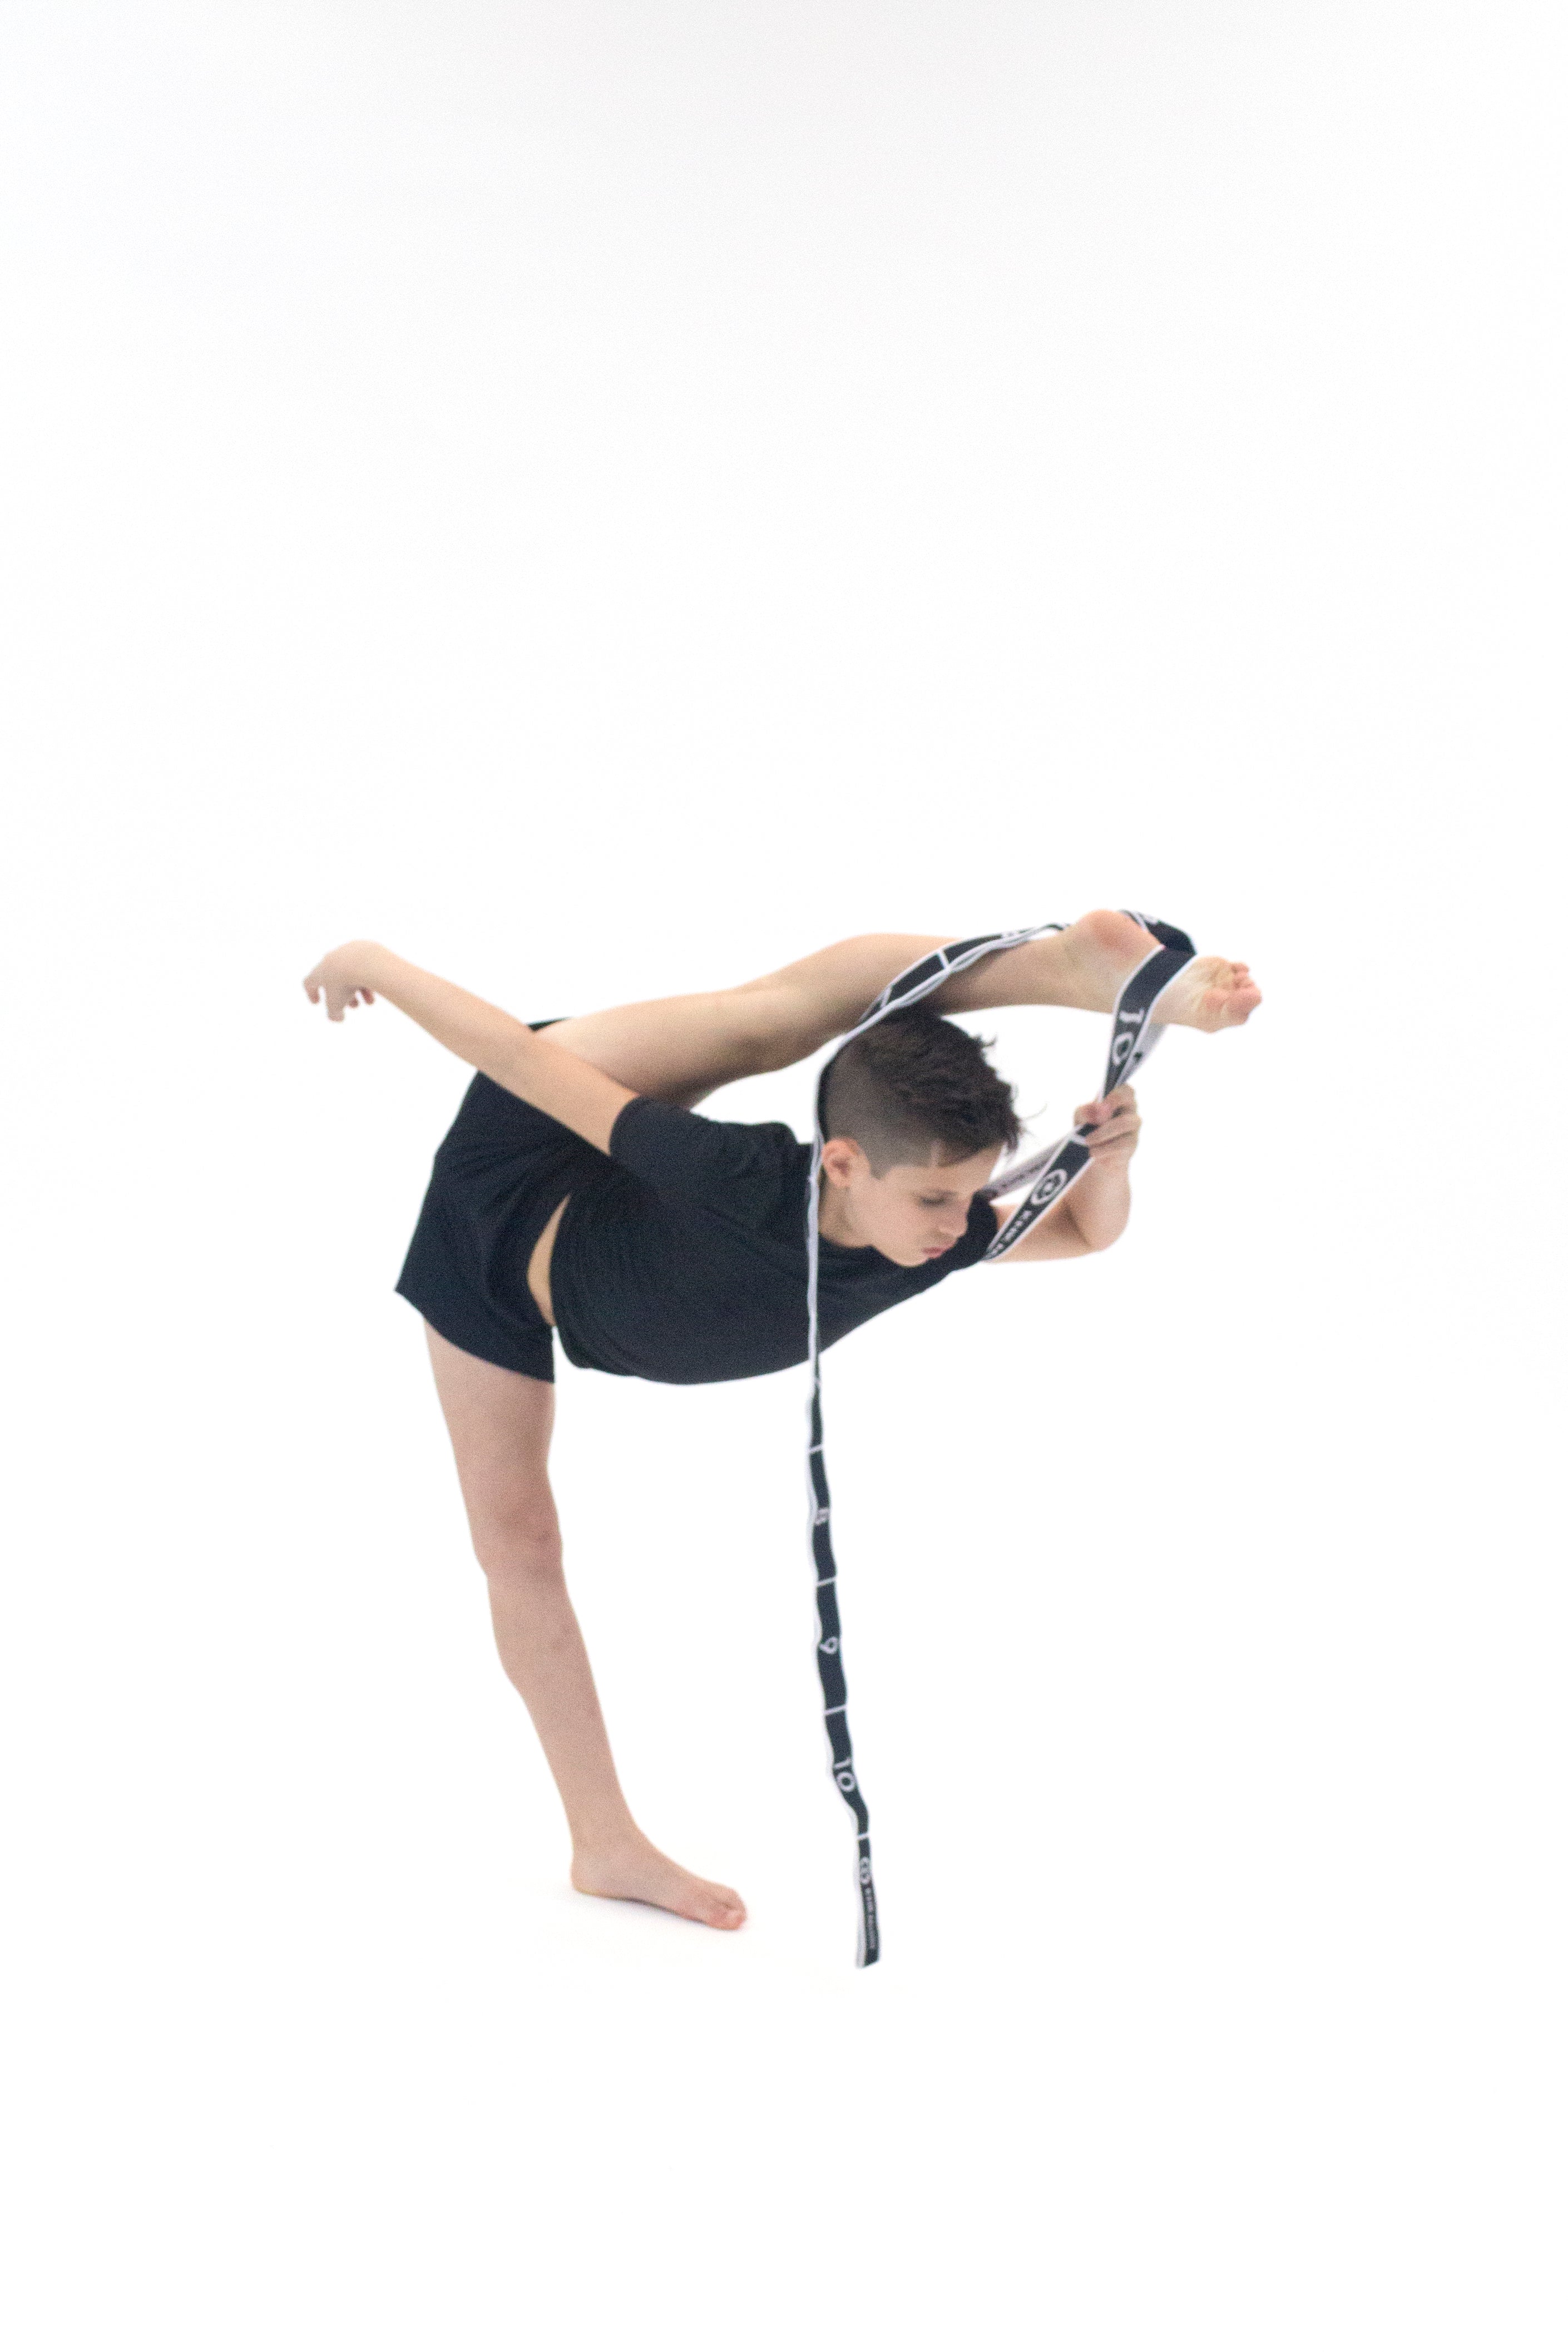 Buy Stretch Band Premium for Yoga & Gymnastics – KNKMiami